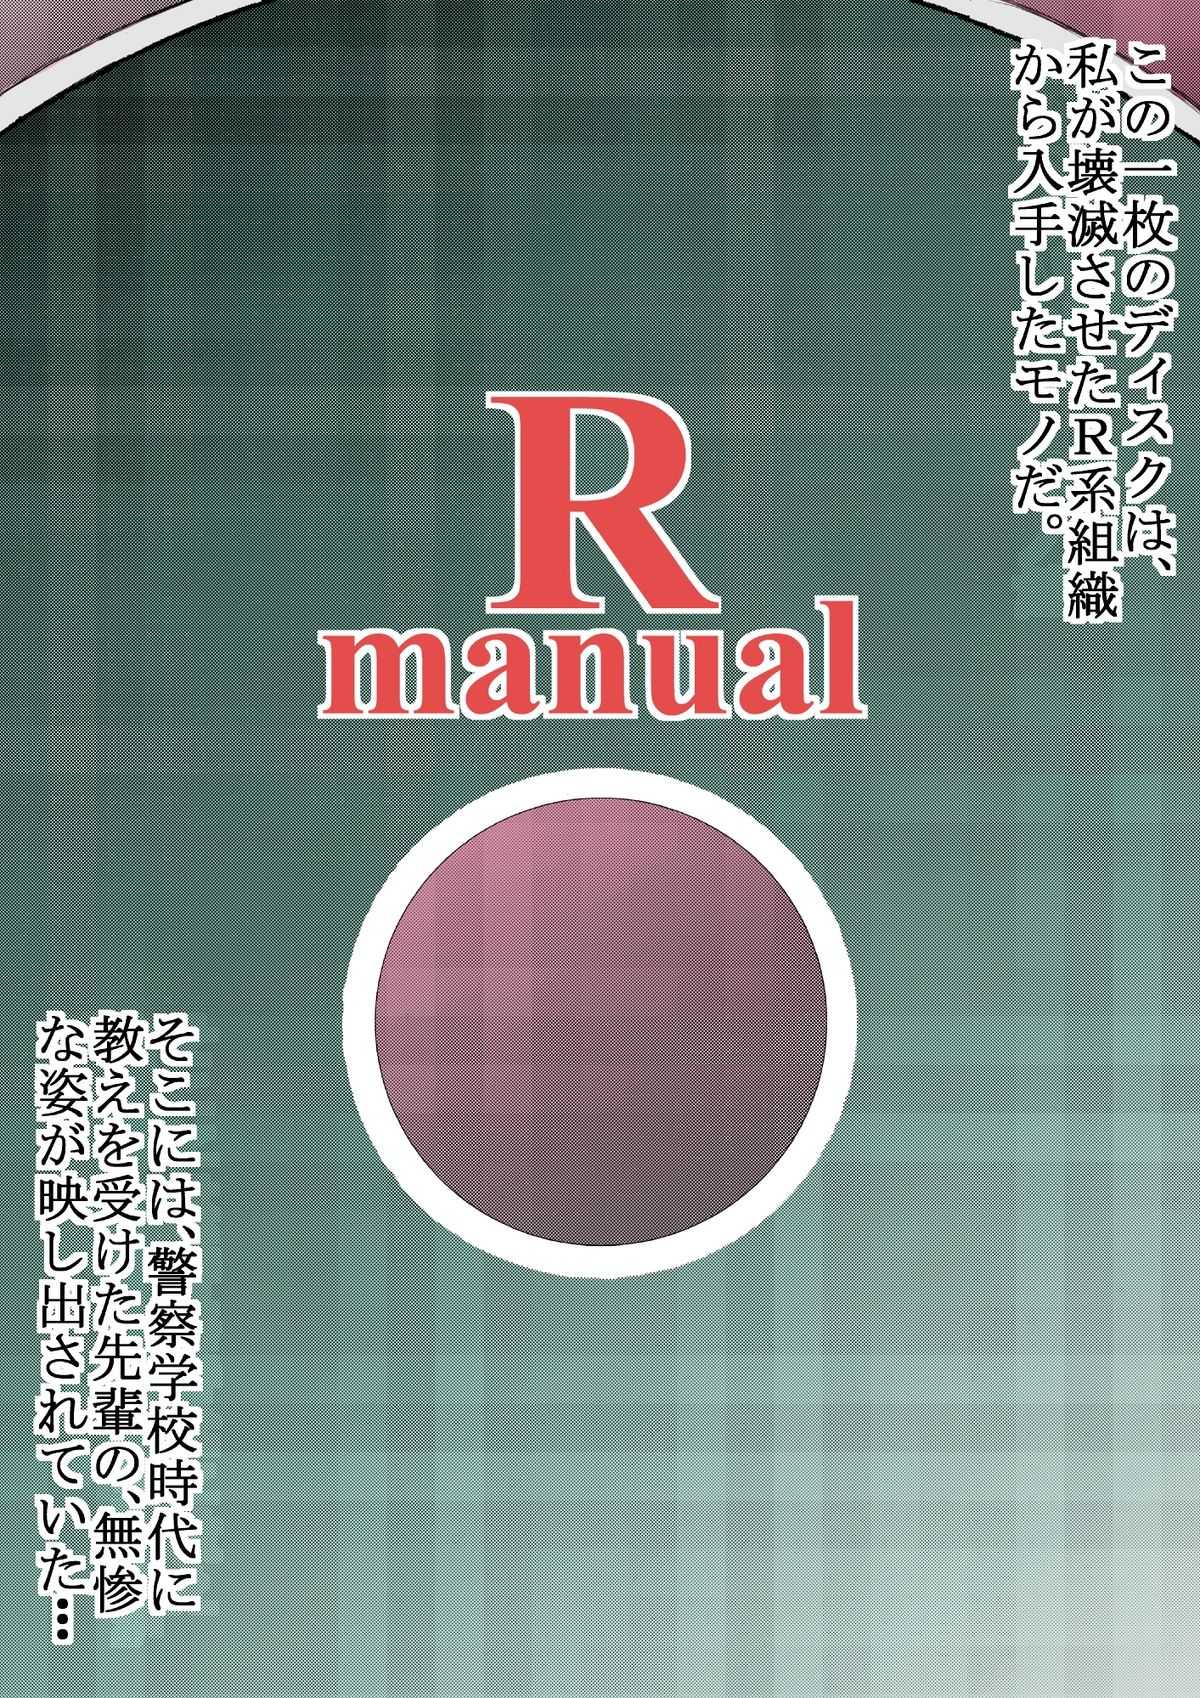 [Yomise no Hiyoko] Rmanual R.B補完計画 [よみせのひよこ] Rmanual R.B補完計画